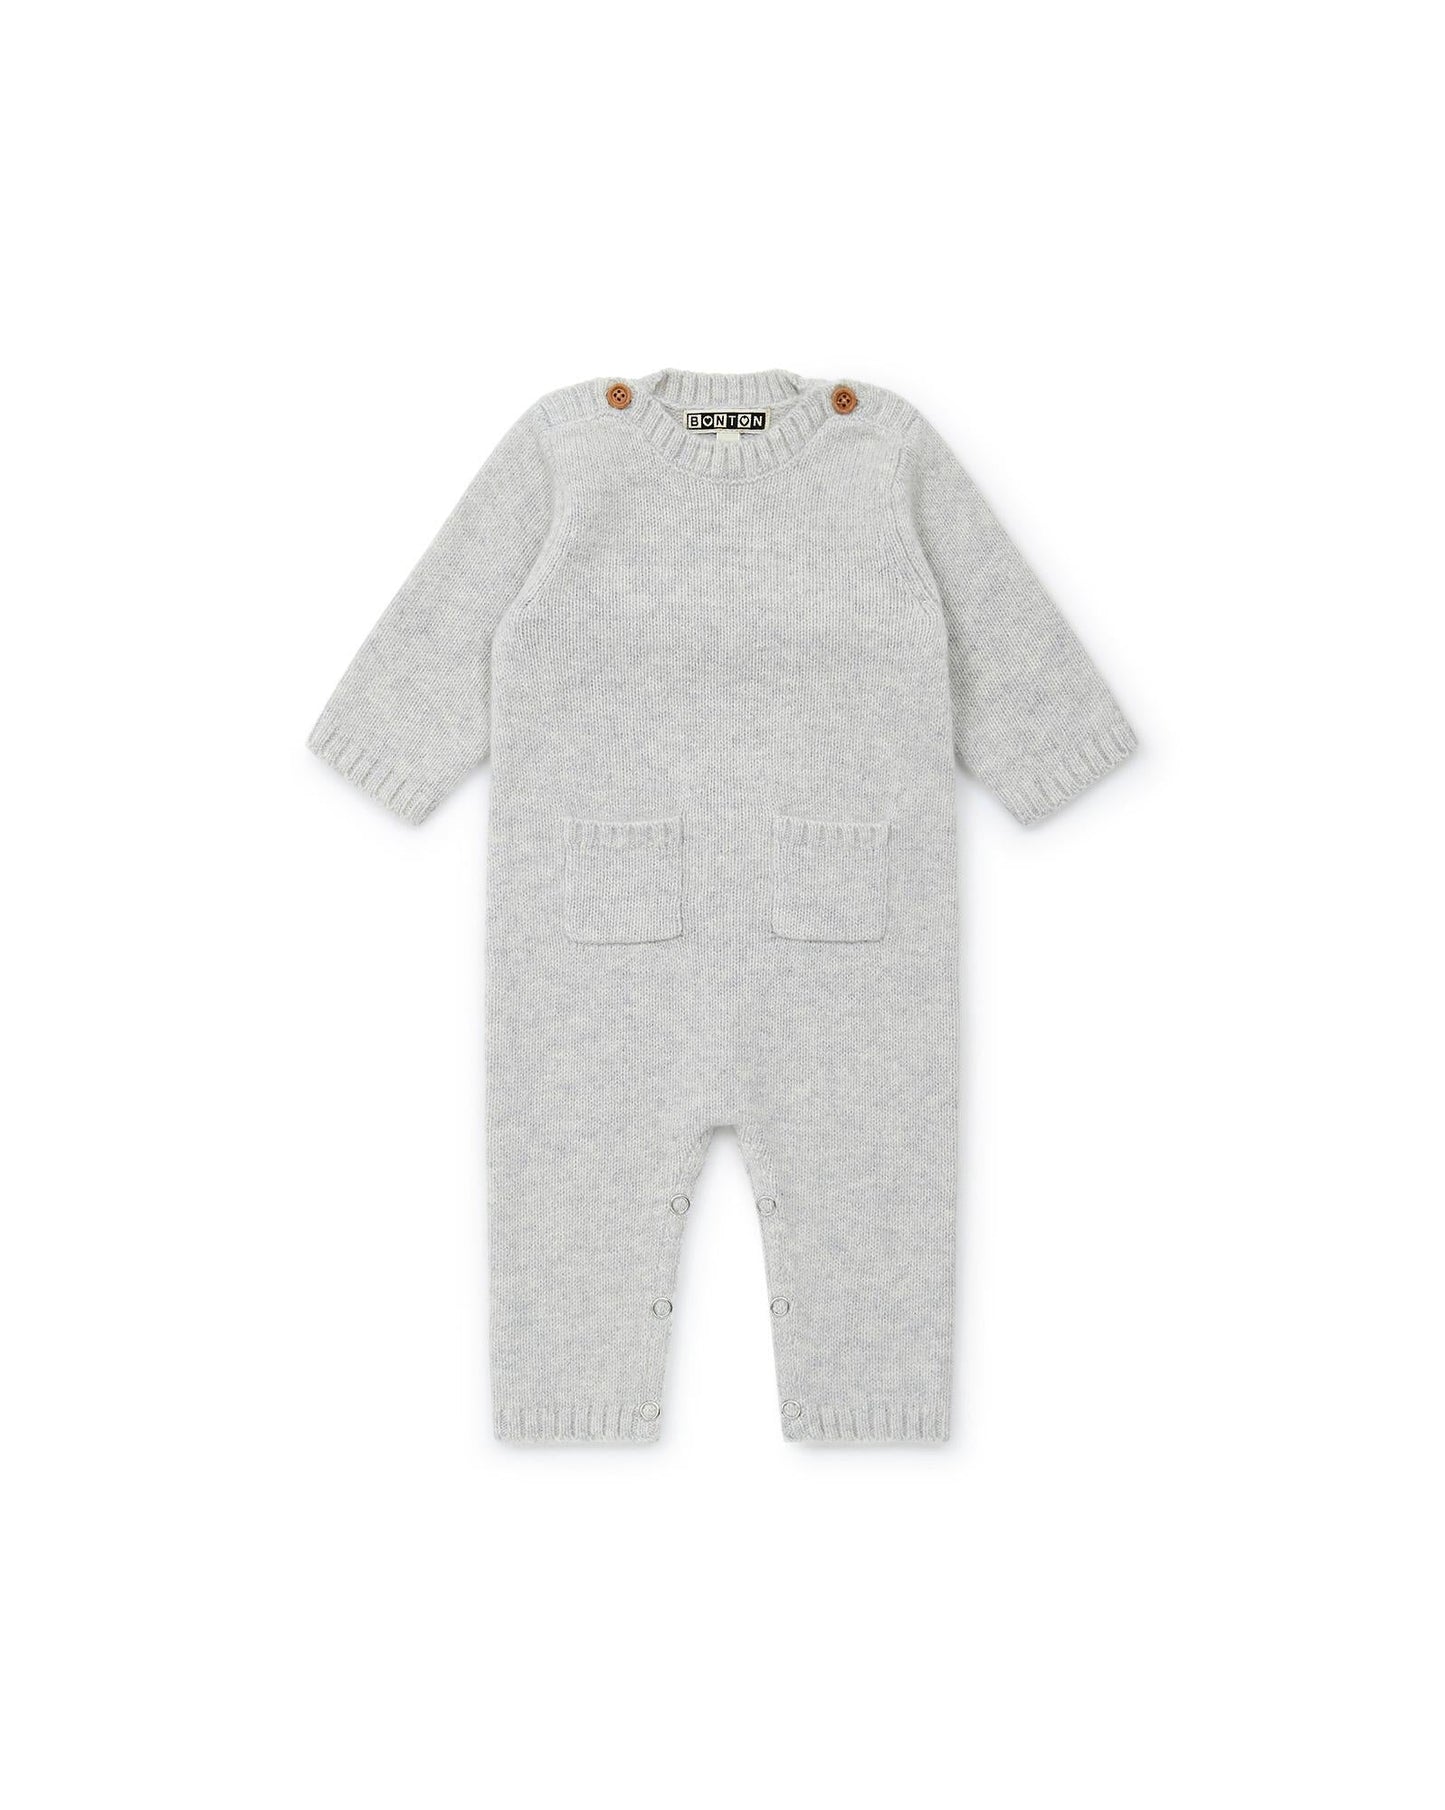 Jumpsuit of Newborn grey Baby in Wool